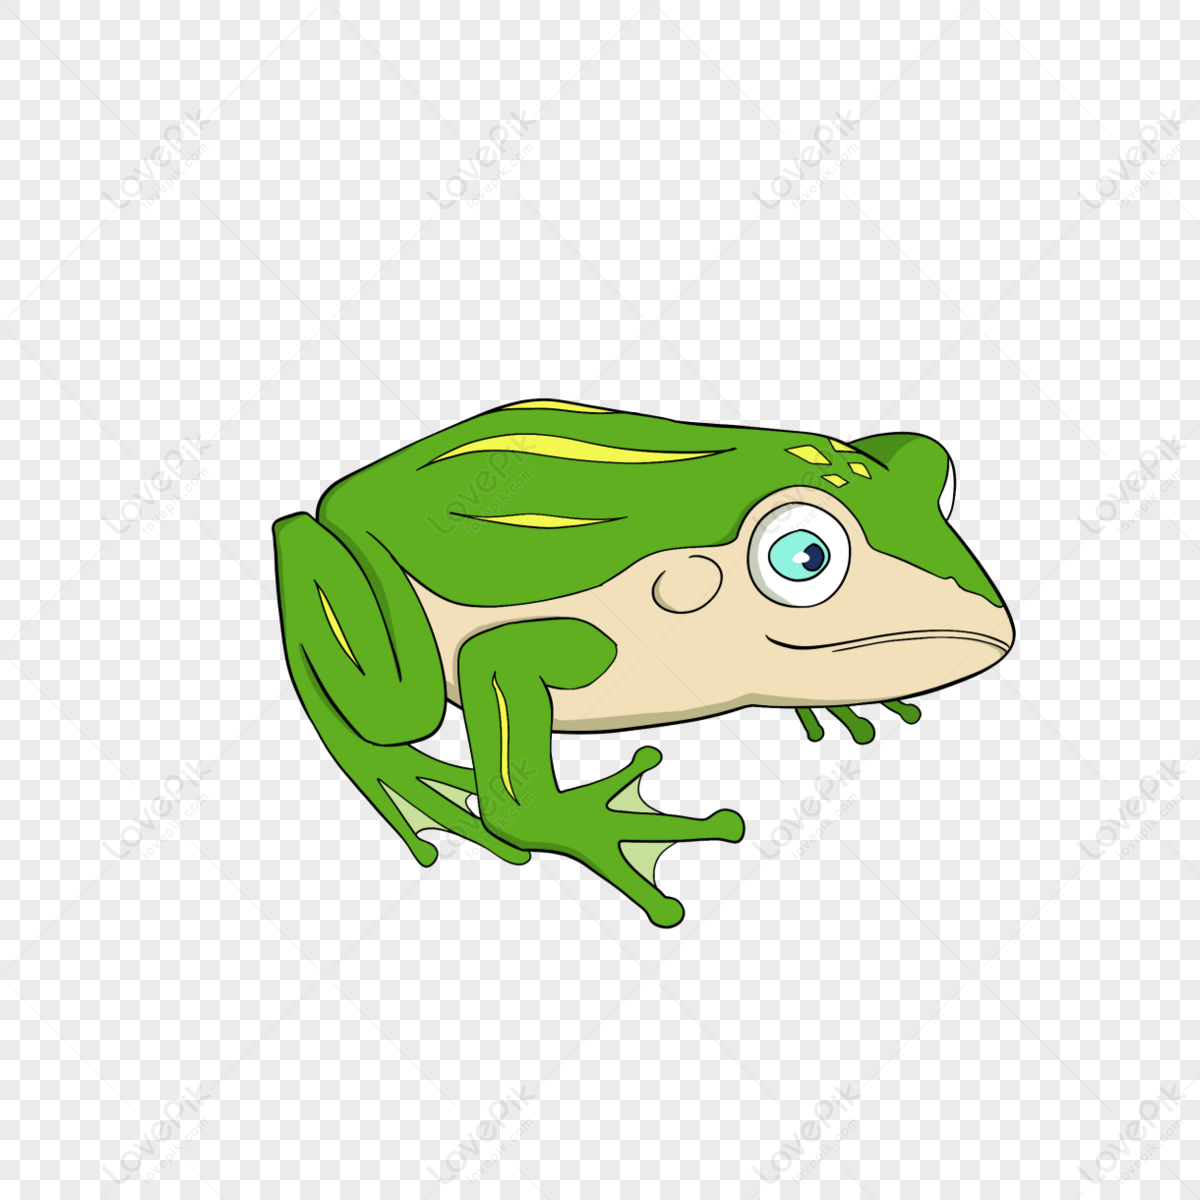 Blue Eye Striped Cartoon Frog Clipart,blue Stripes,frog Eyes PNG Hd ...